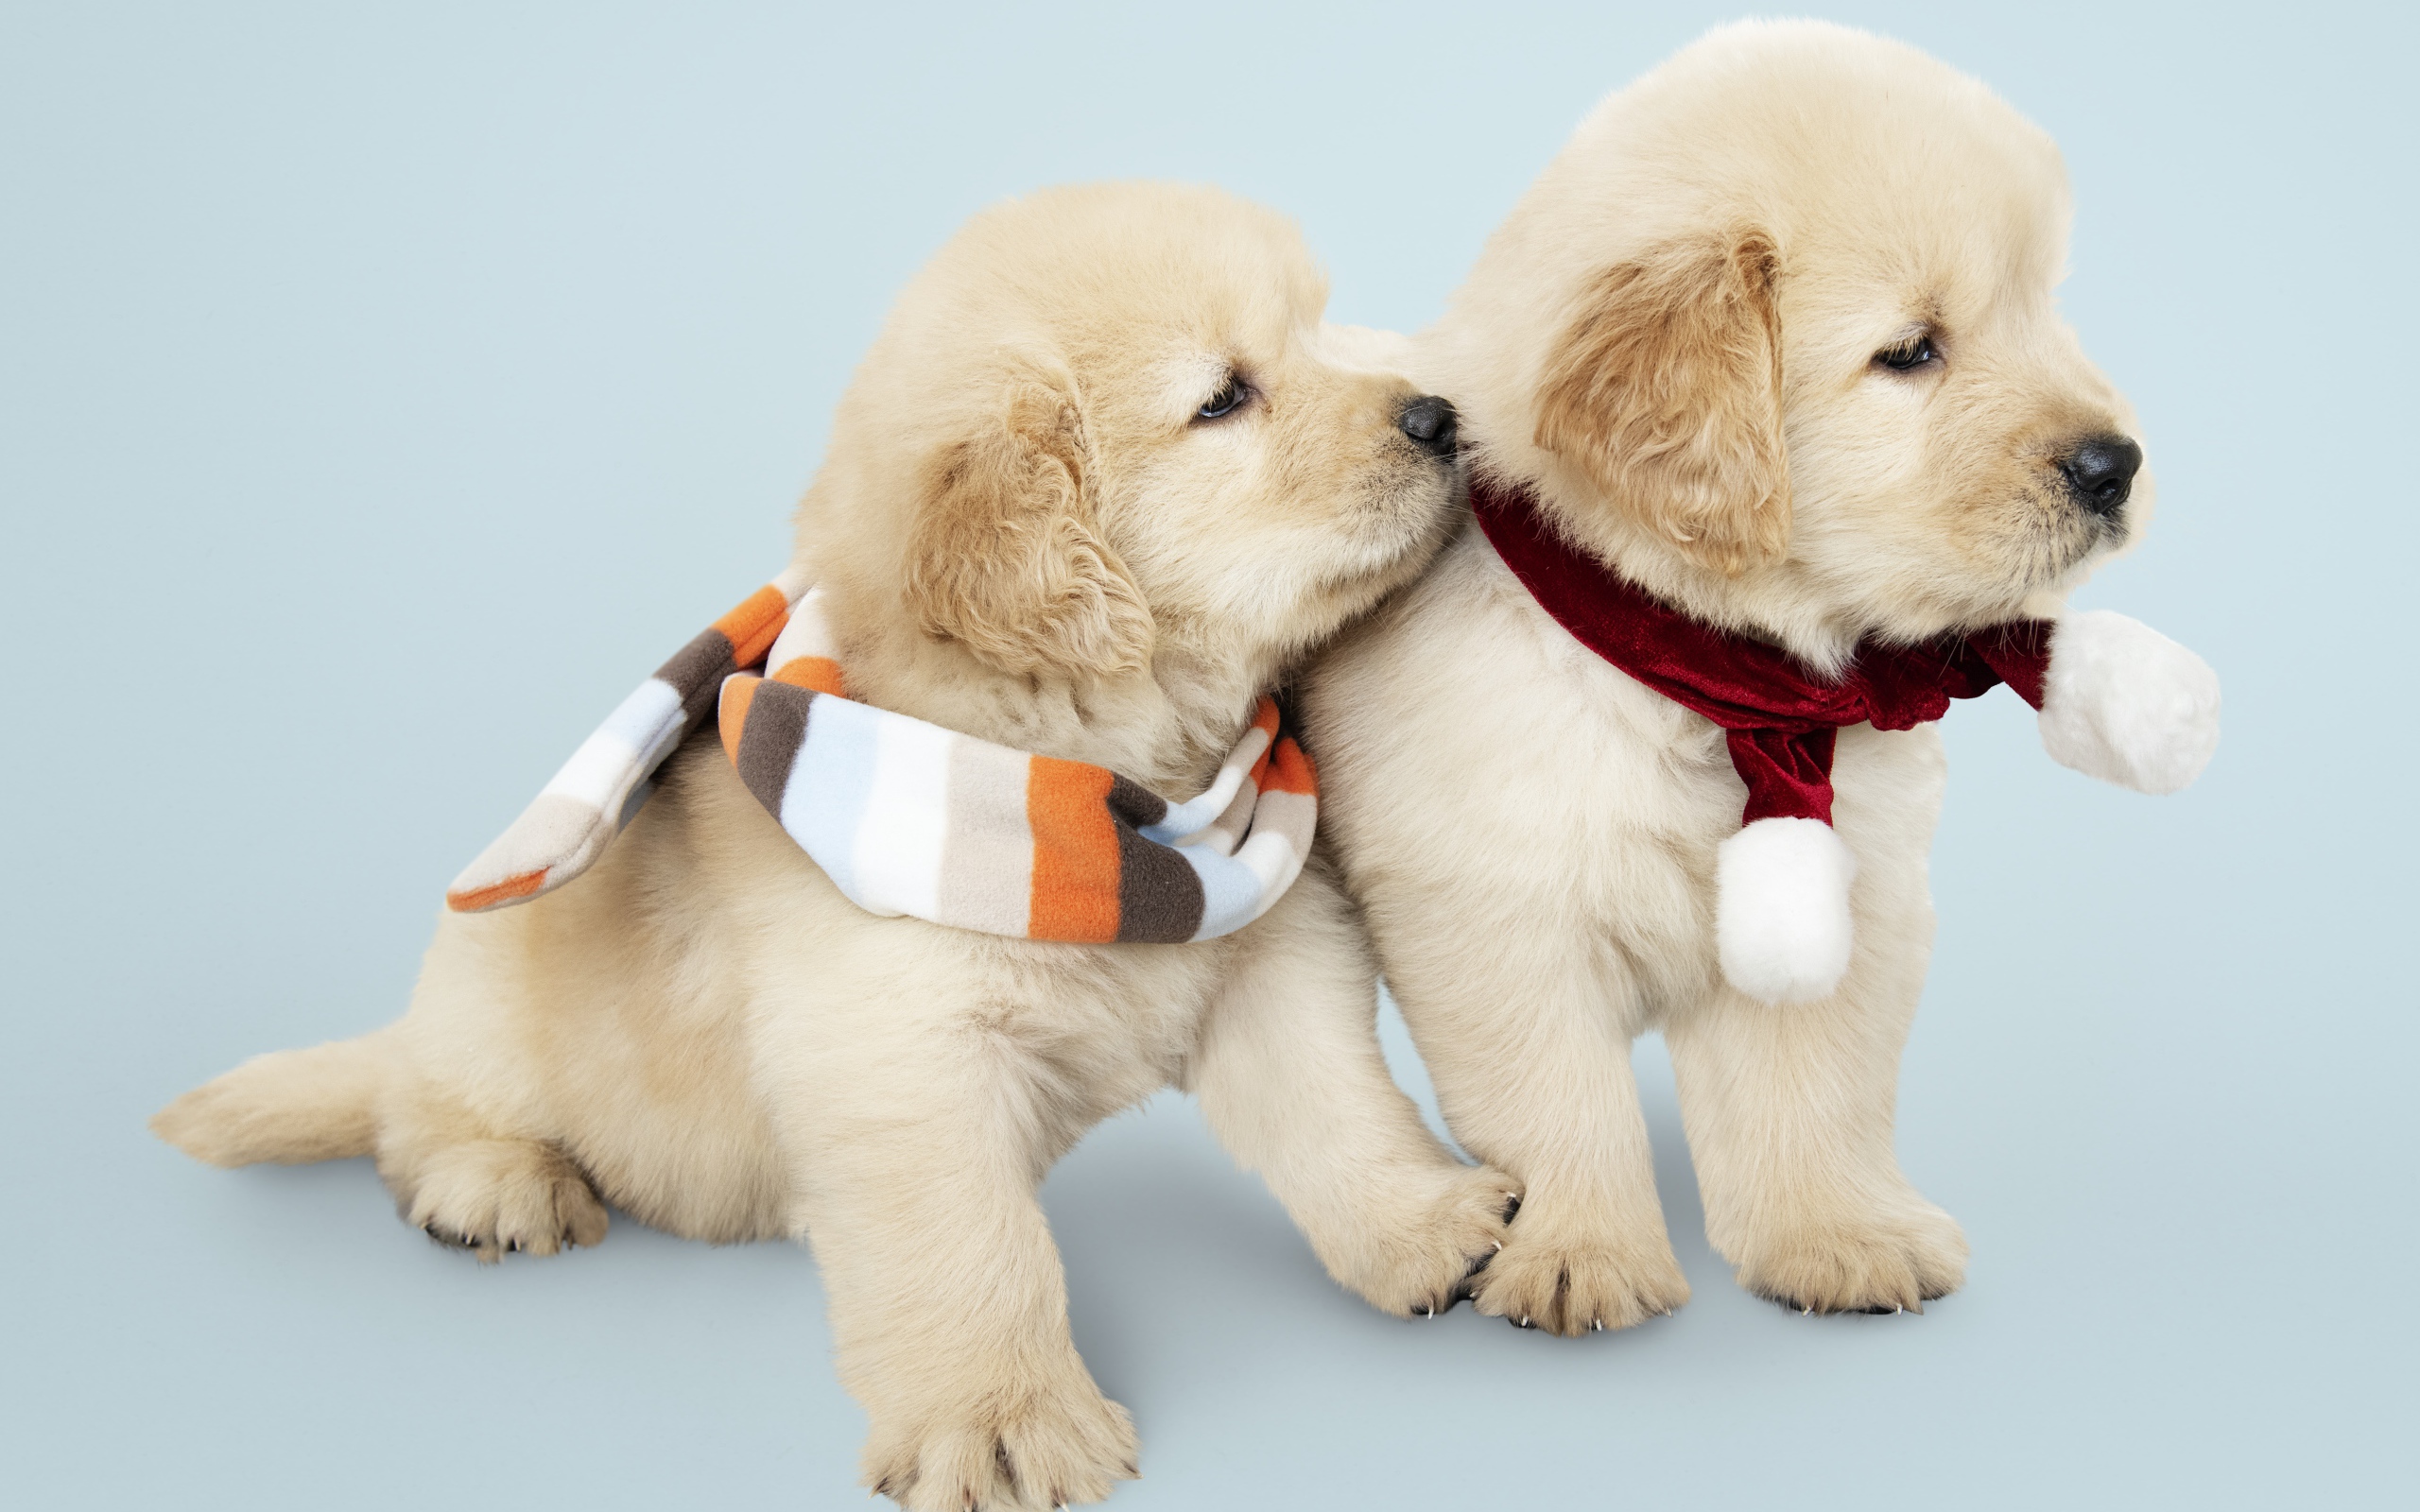 Two funny Golden Retriever puppies with scarves around their necks